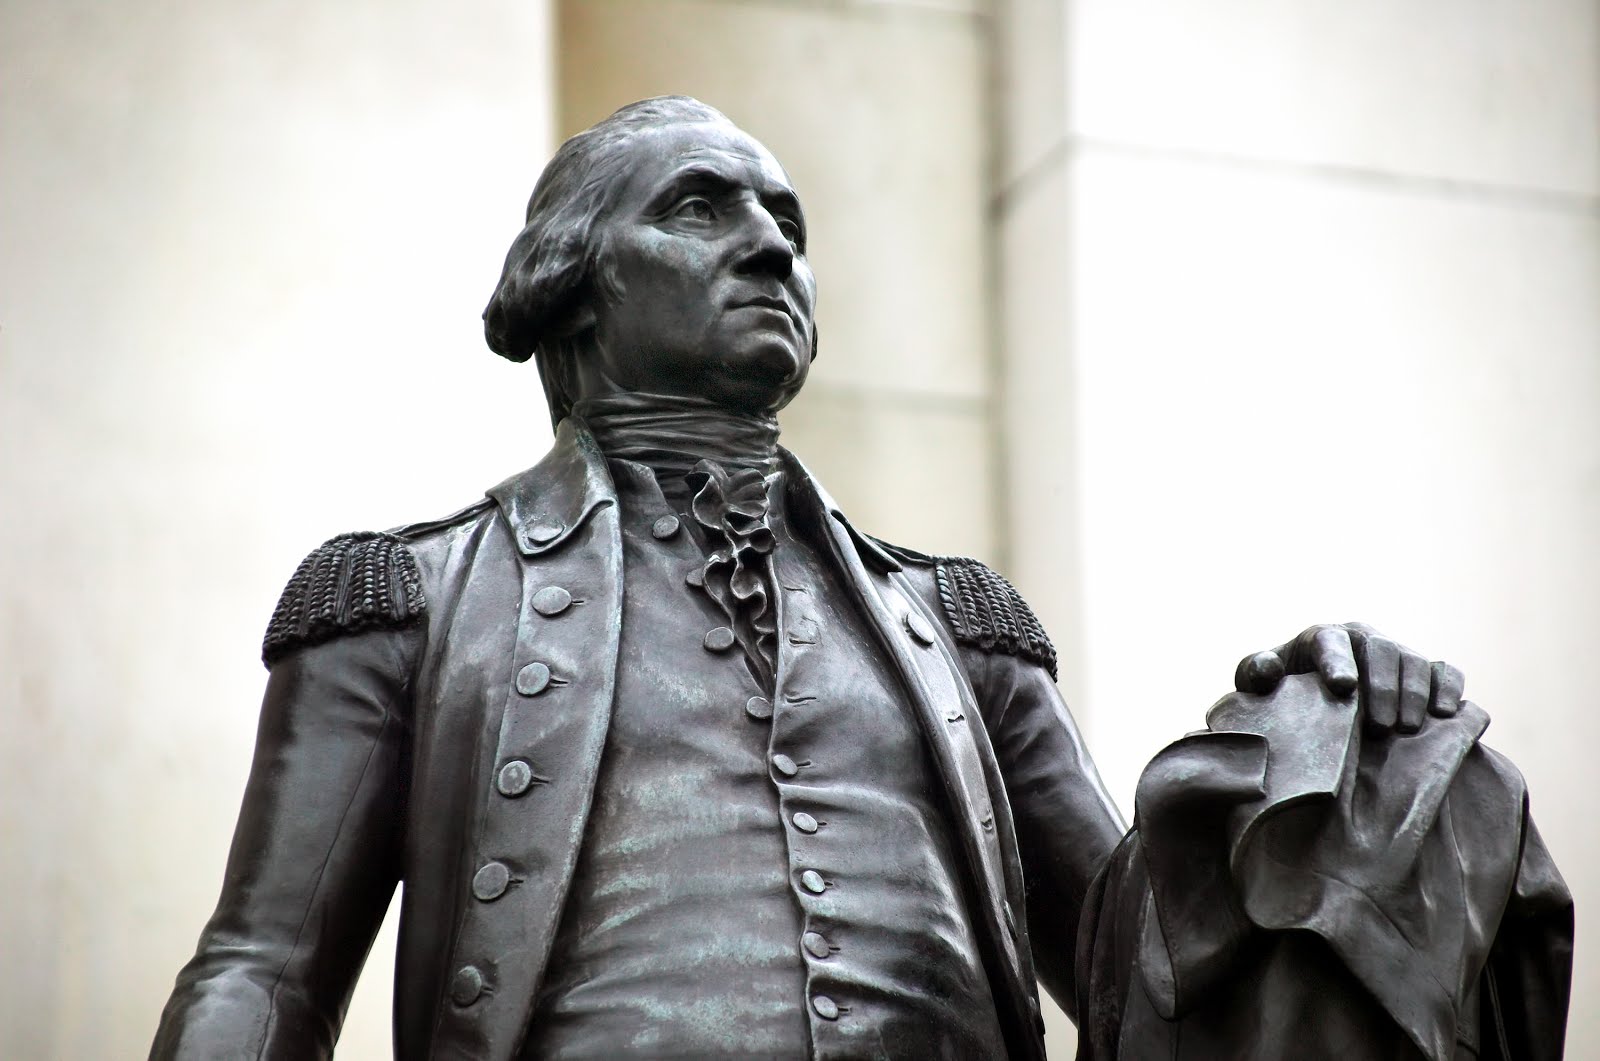 WJMI Affiliate: The George Washington Center for Constitutional Studies